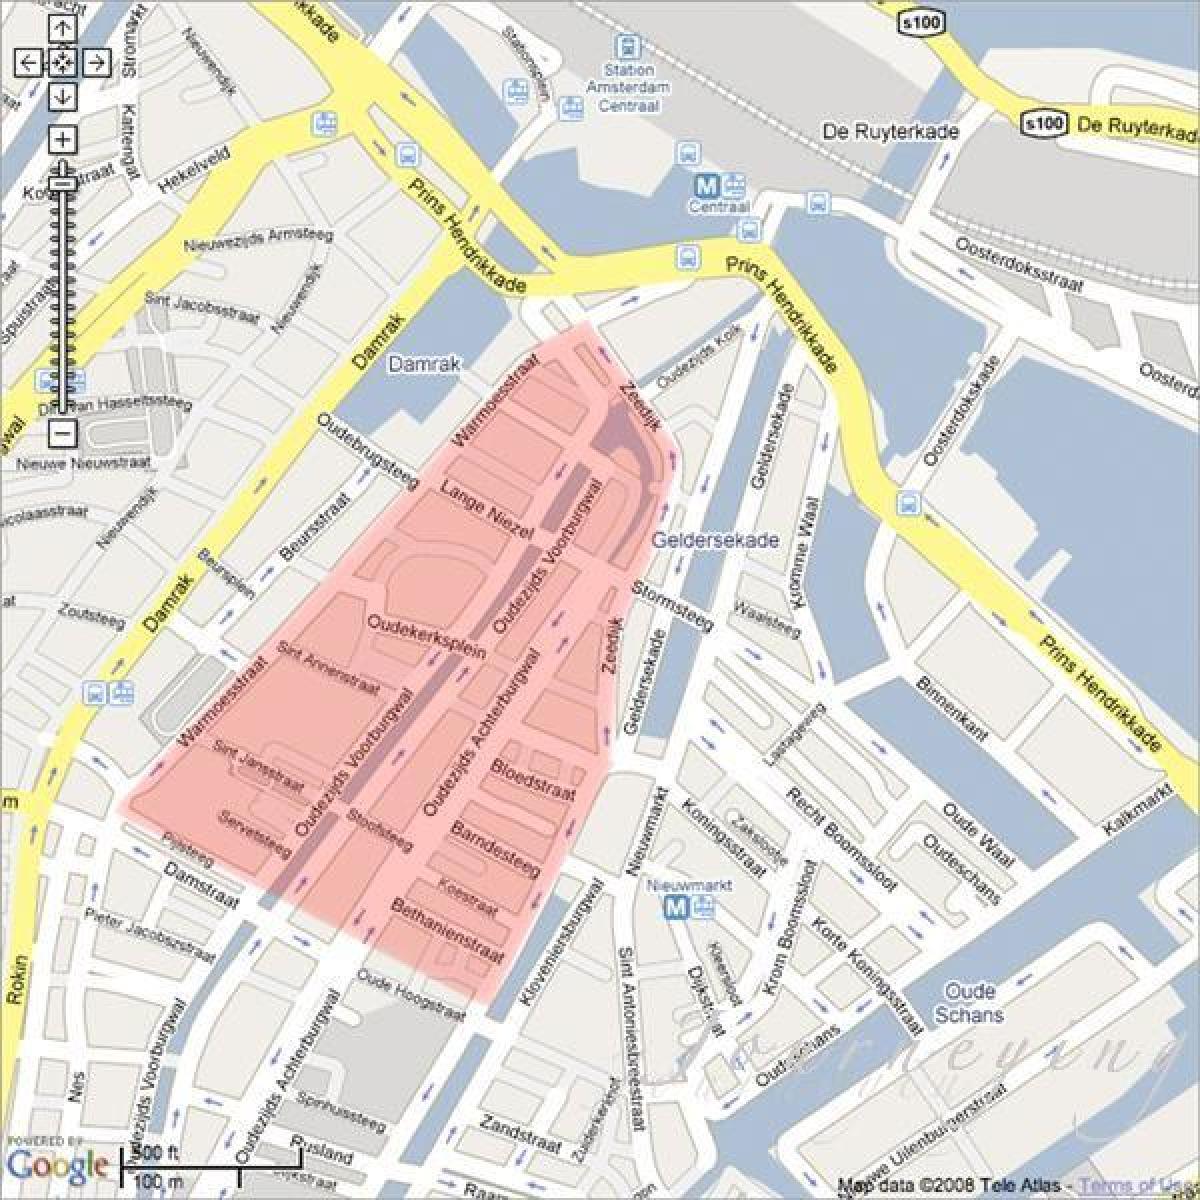 Peta Vienna daerah lampu merah